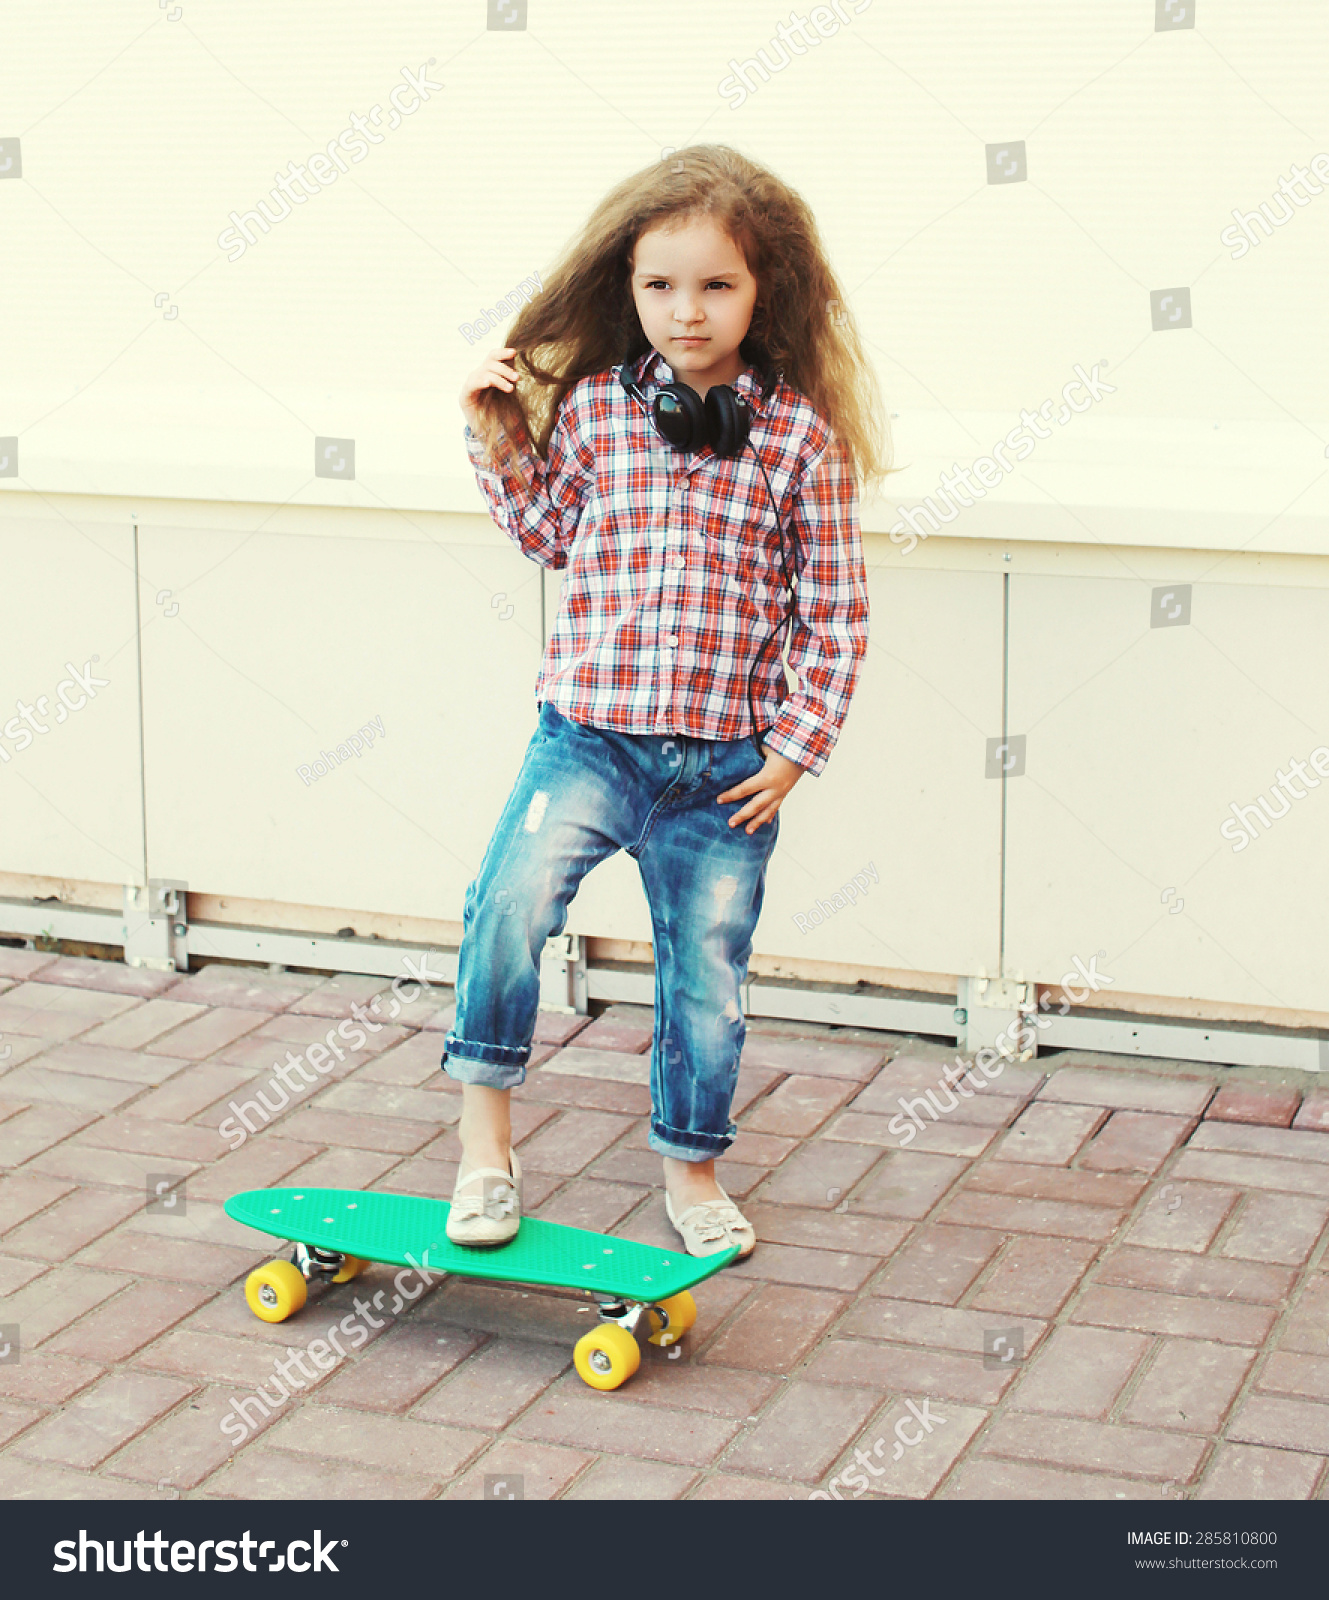 Fashion Kid Concept - Stylish Little Girl Child With Skateboard Having